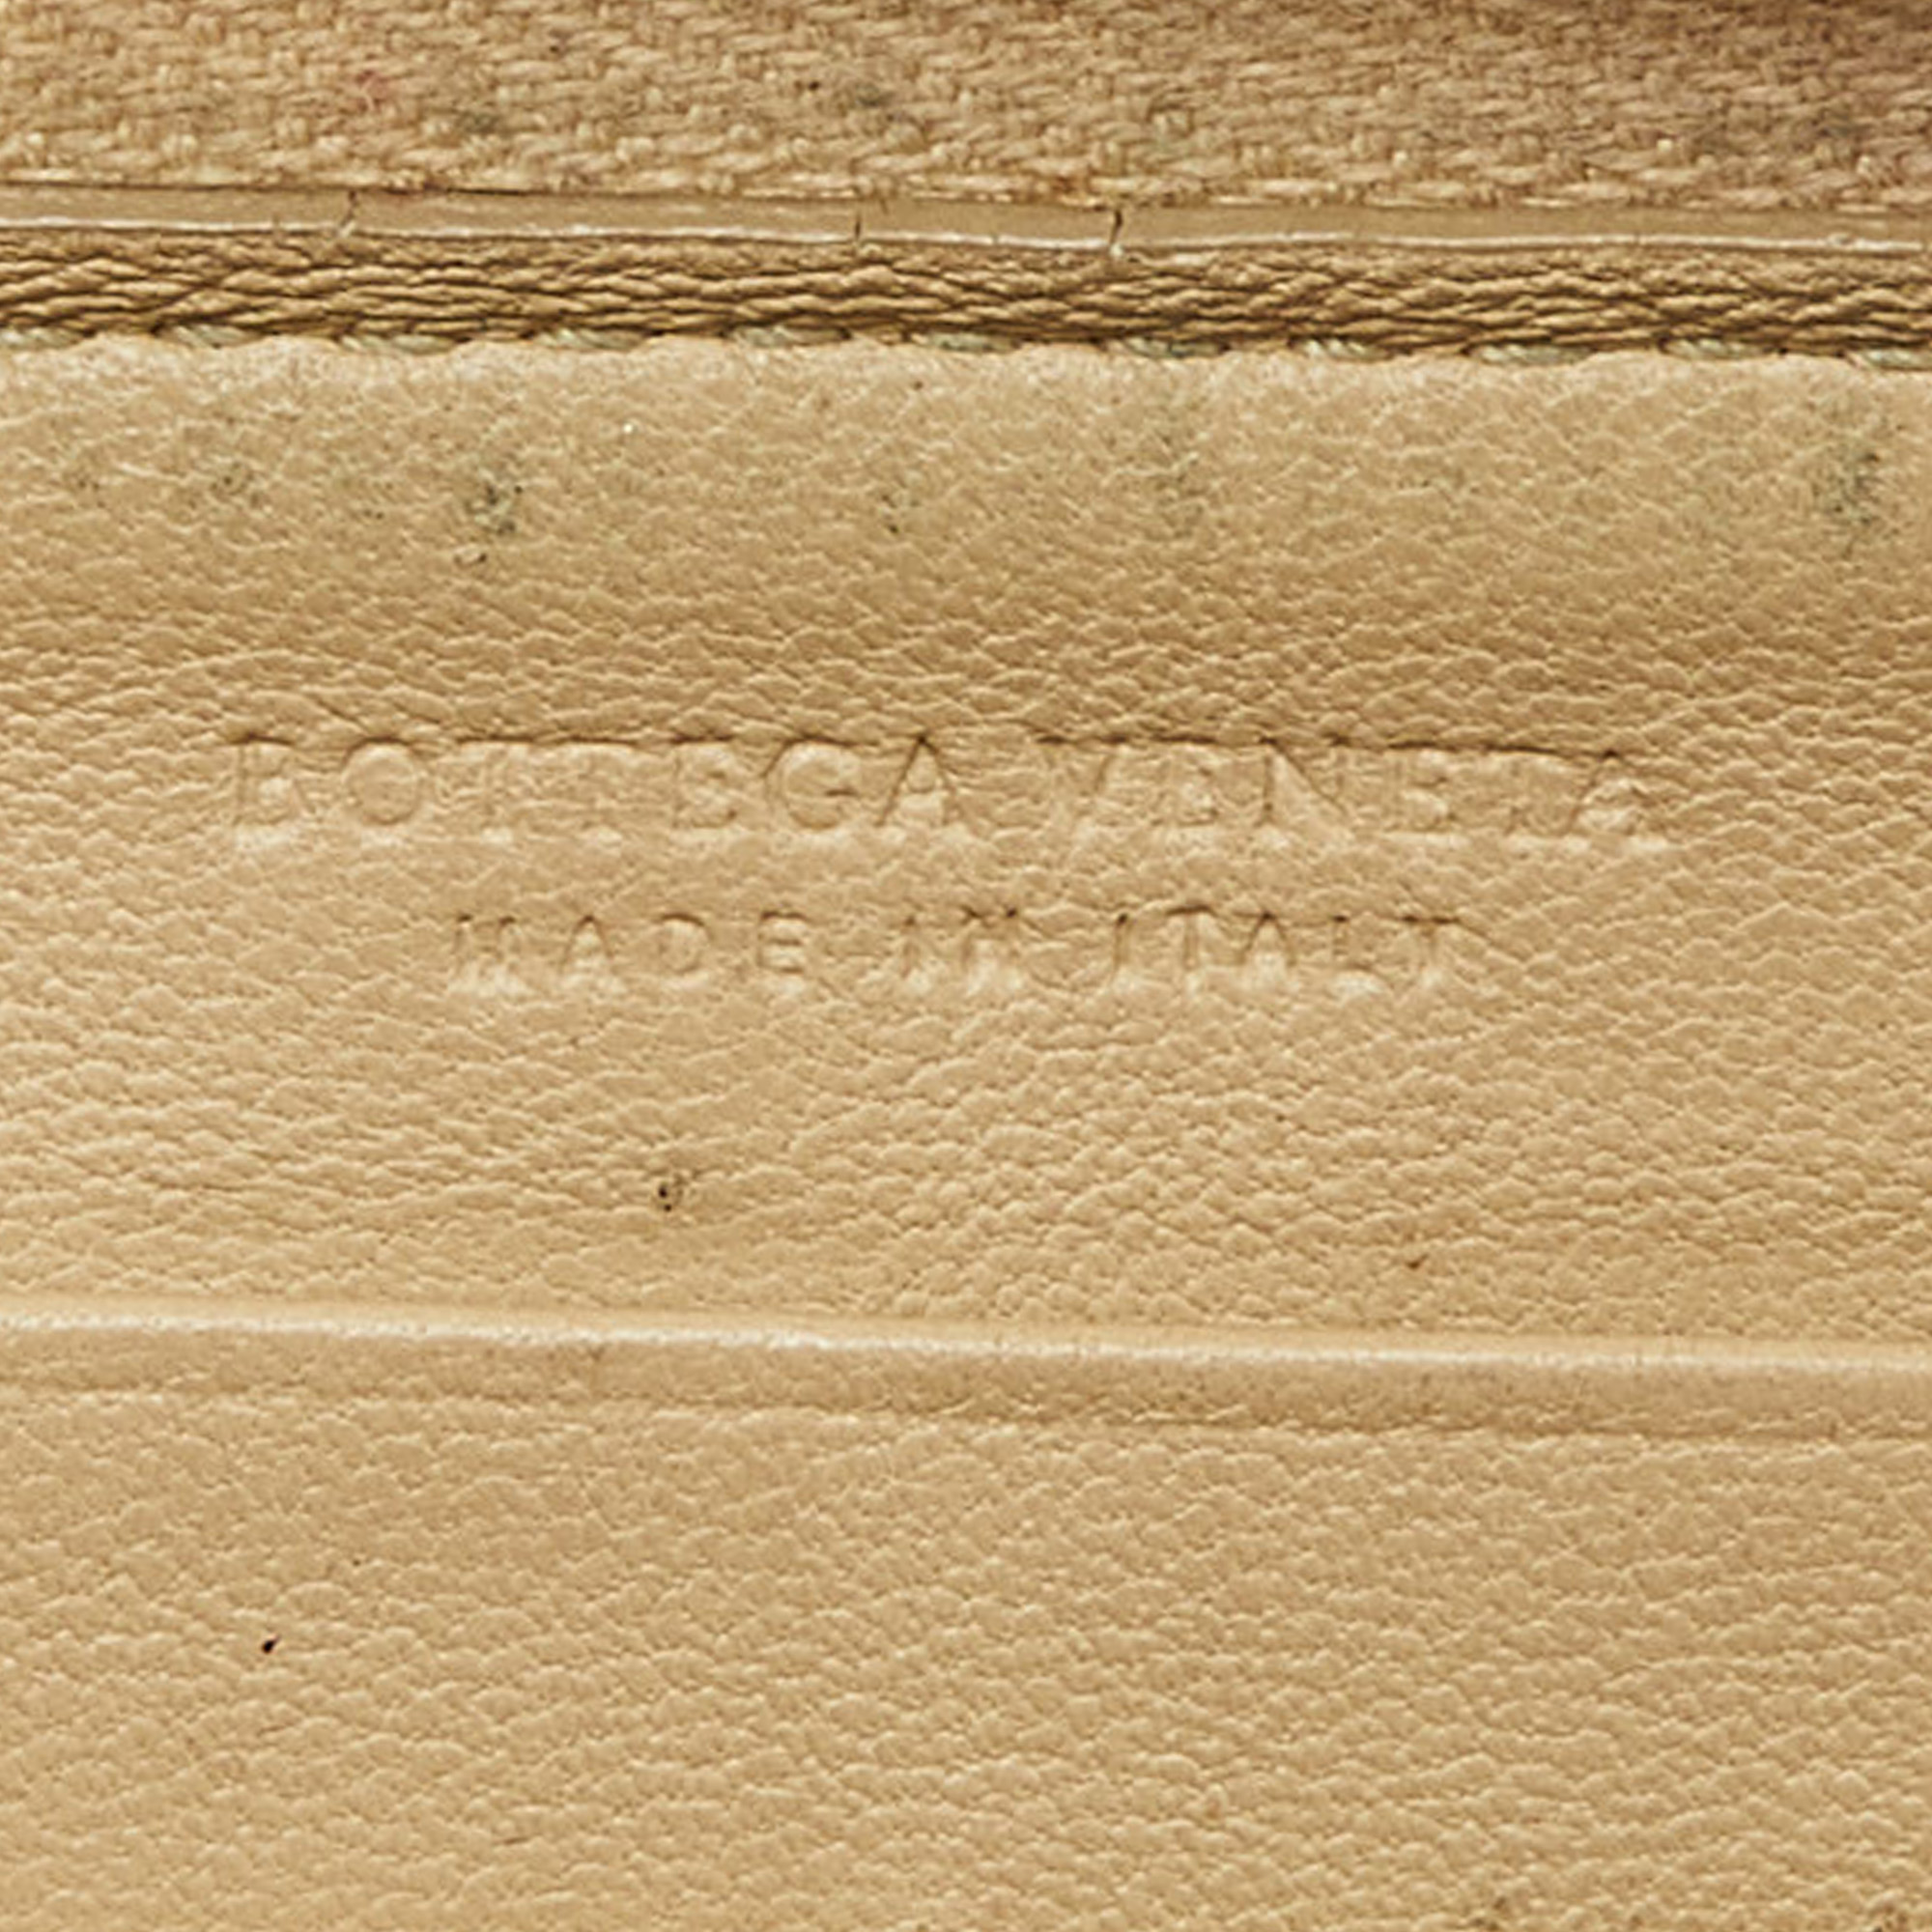 Bottega Veneta Cream Intrecciato Leather Zip Around Wallet